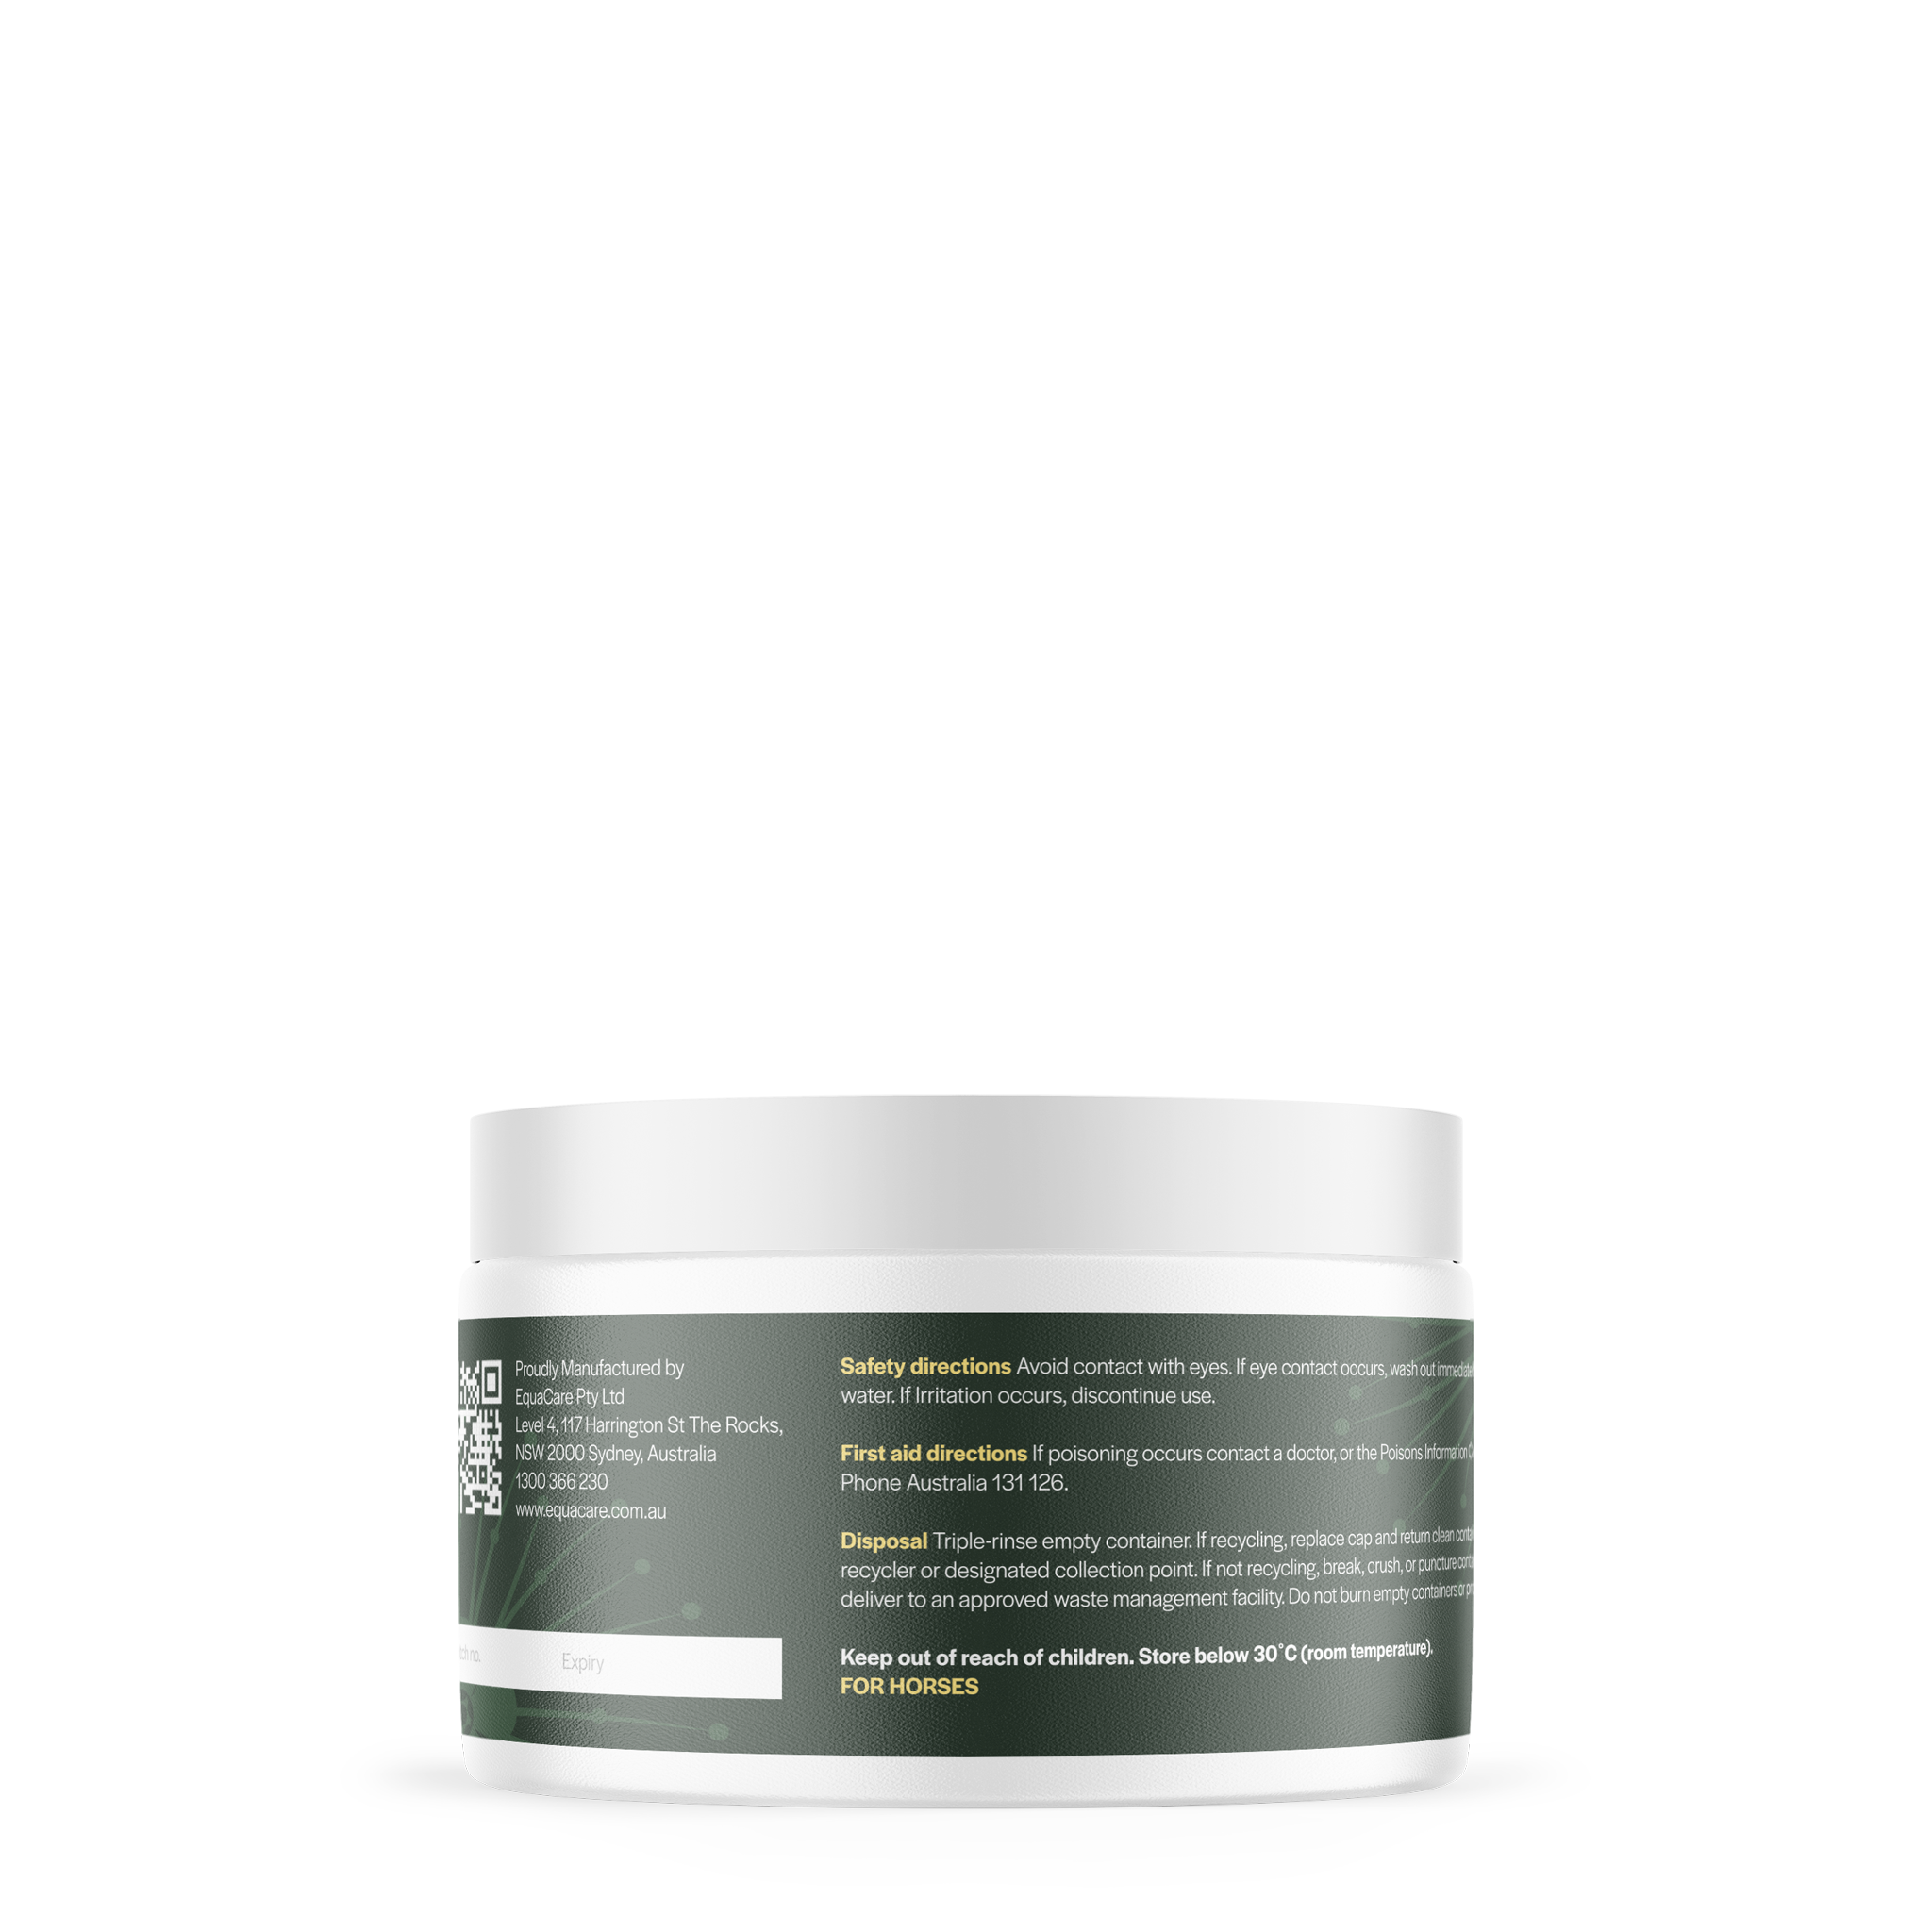 CuraPet® Remedeaz Hair Treatment 250g